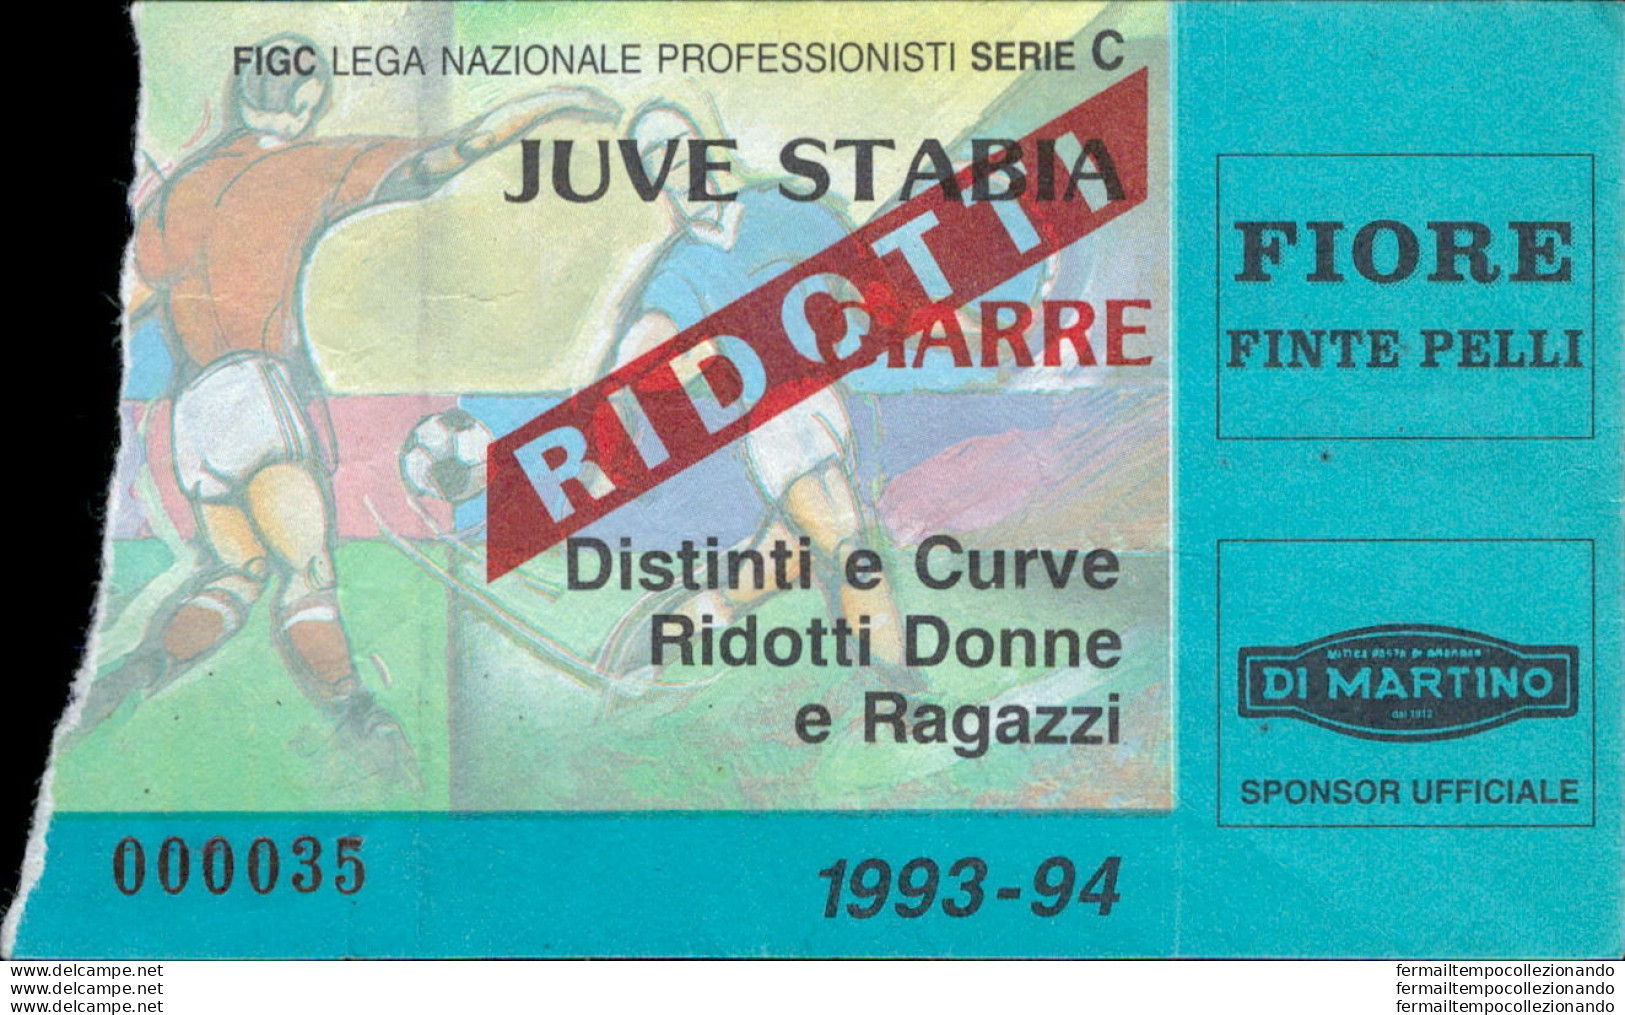 Bl79 Biglietto Calcio Ticket Juve Stabia - Giarre 1993-94 - Tickets D'entrée